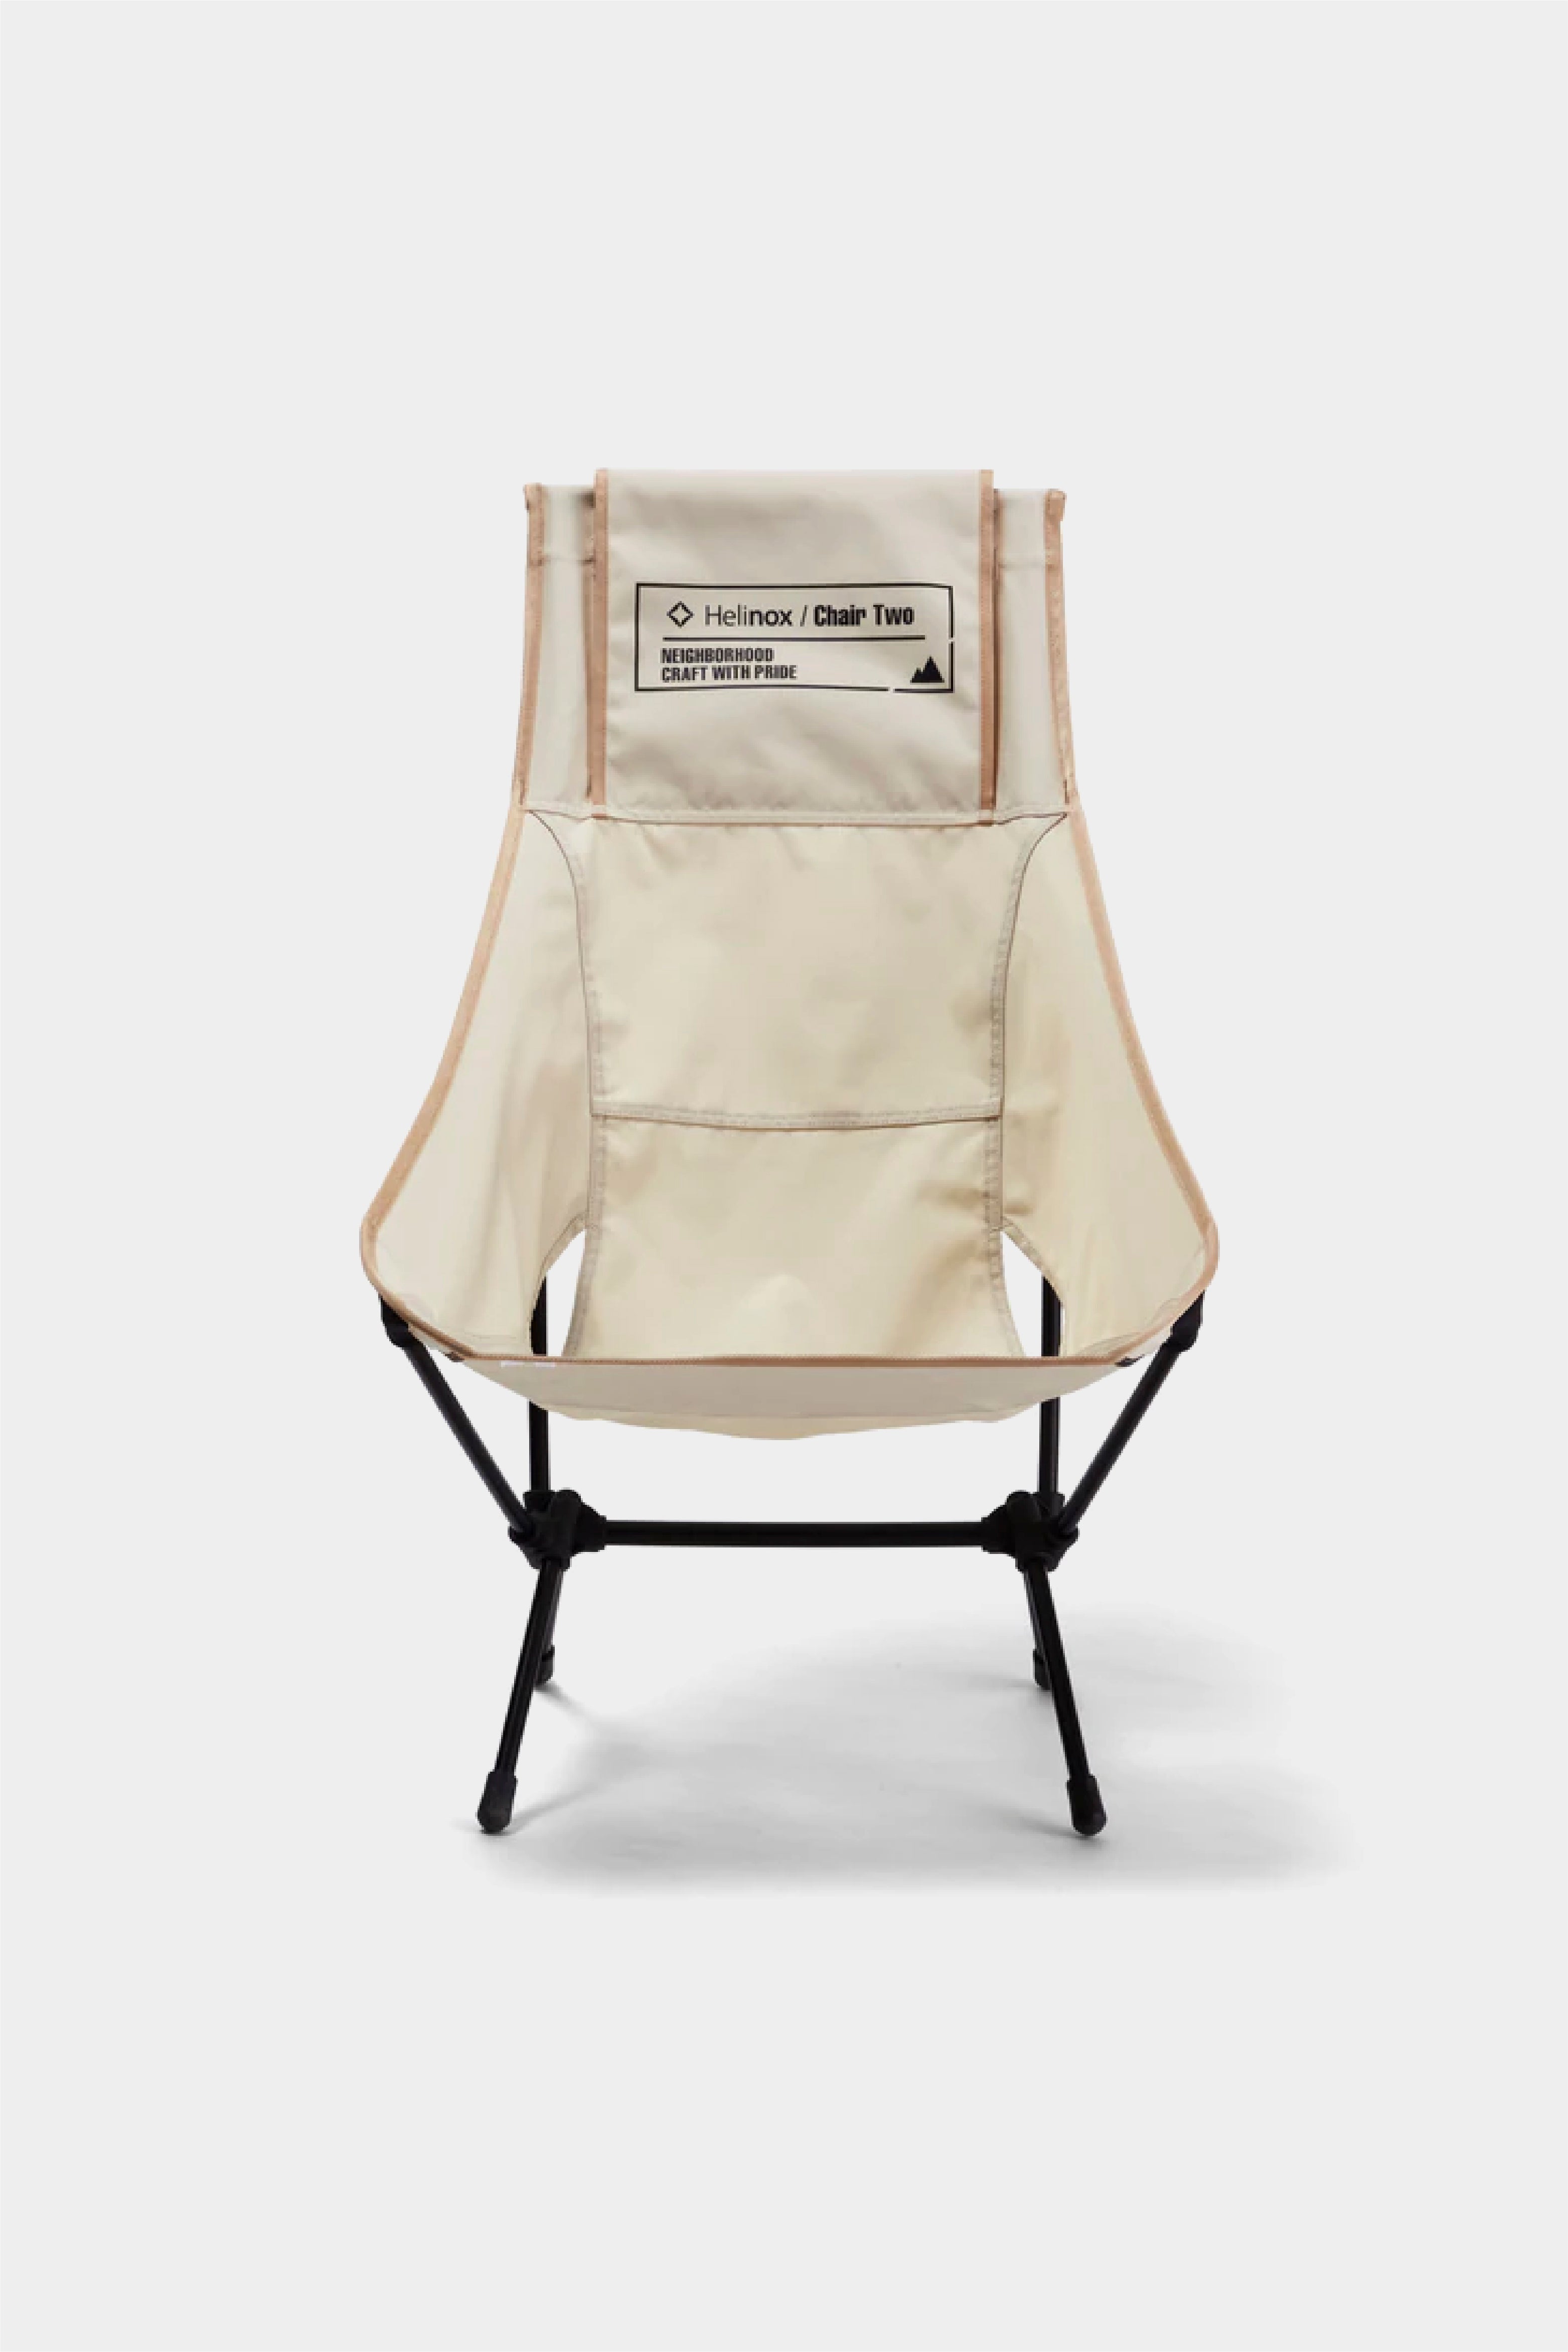 Selectshop FRAME - NEIGHBORHOOD HX / E-Cafe Camp Chair All-Accessories Dubai